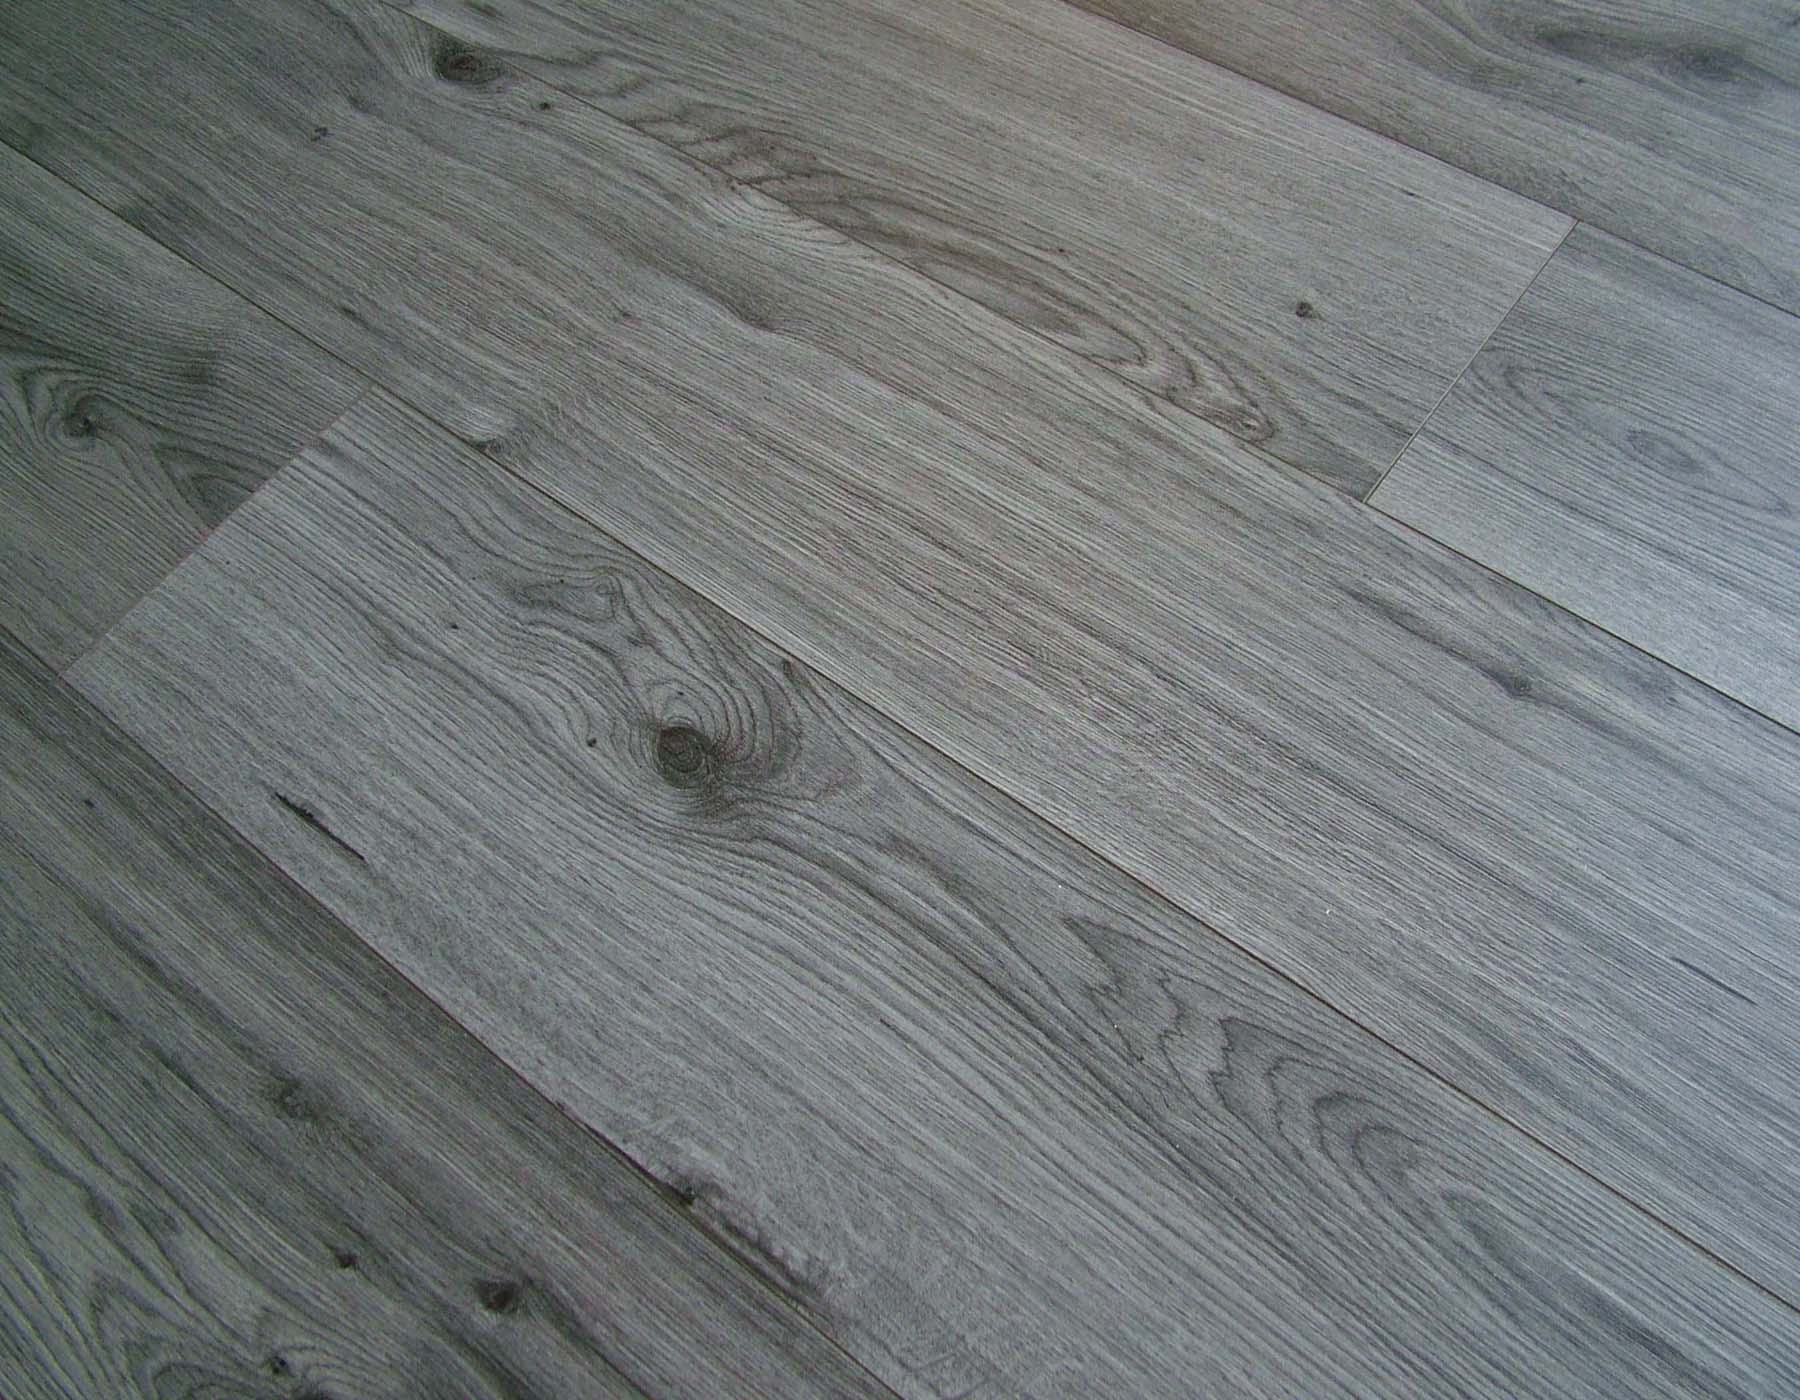 Krnotex Millennium Grey Oak 4v-groove laminate flooring